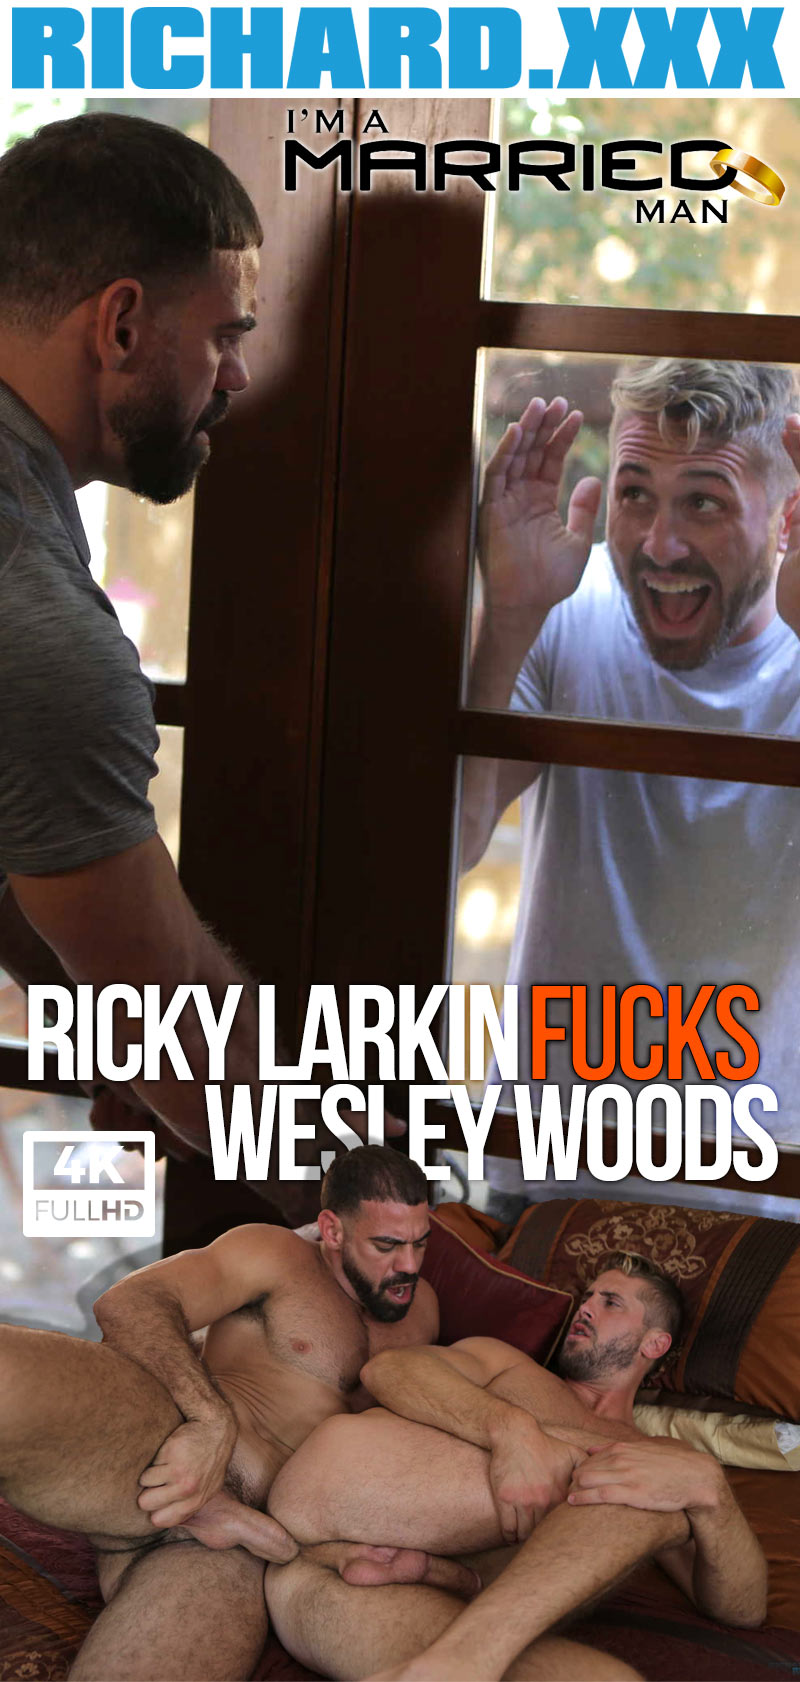 Ricky Larkin Fucks Wesley Woods at Richard.XXX